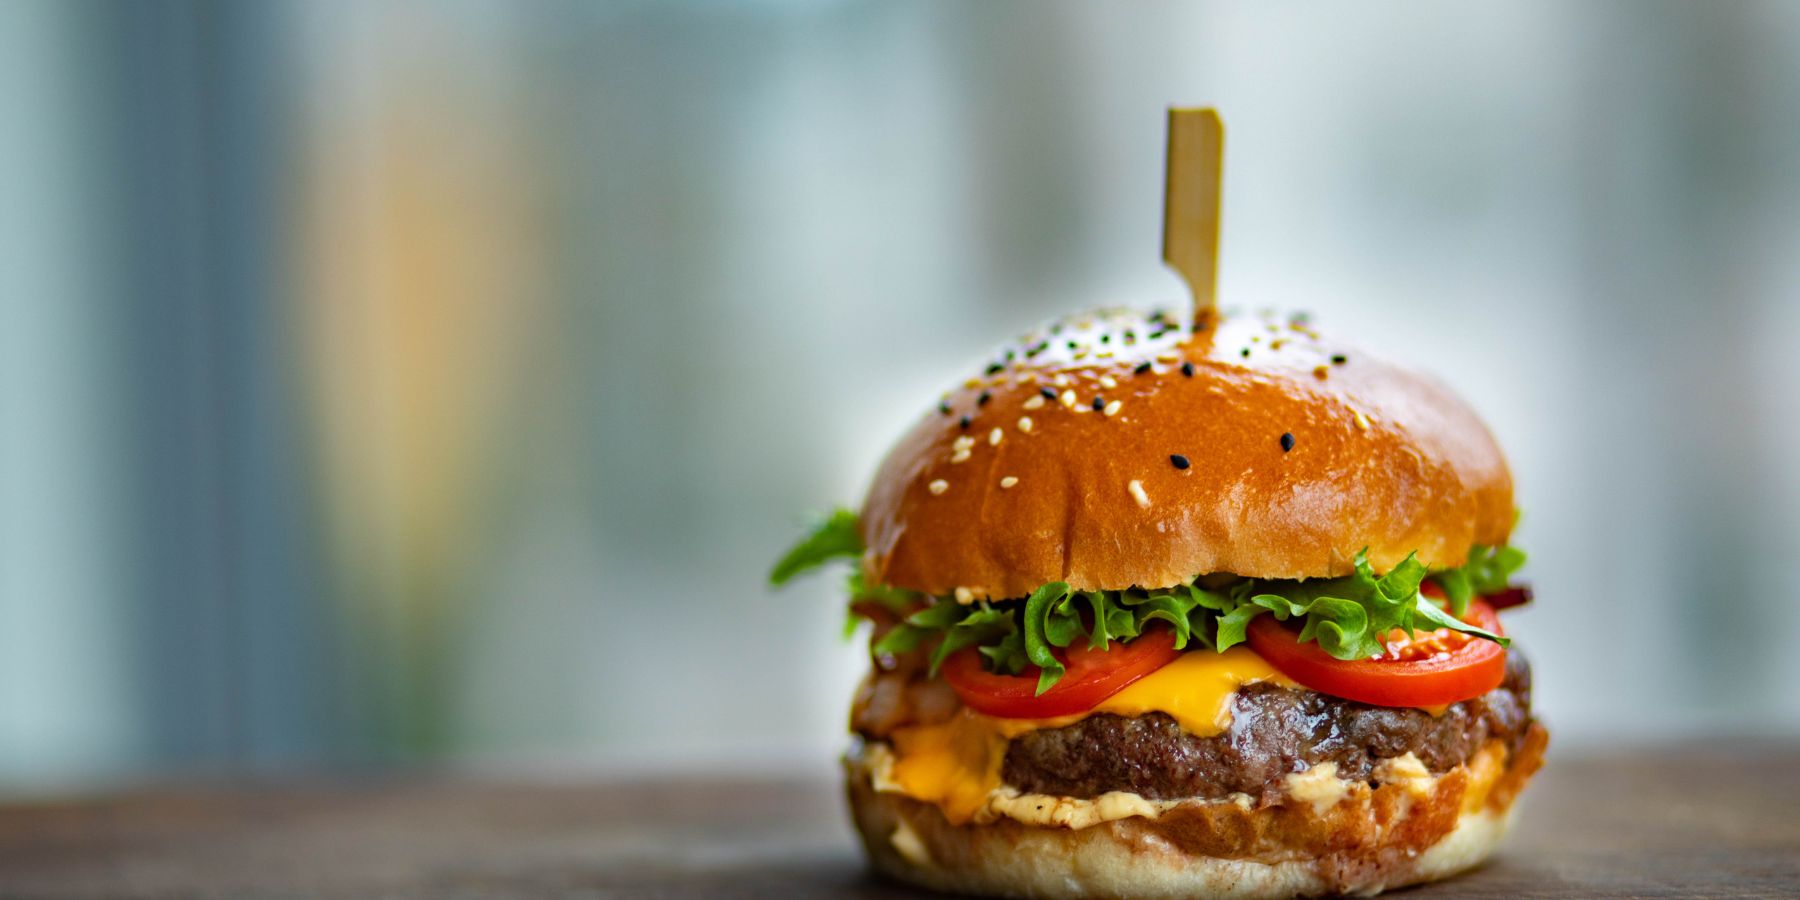 Is Rare Safe? Understanding Burger Temperatures